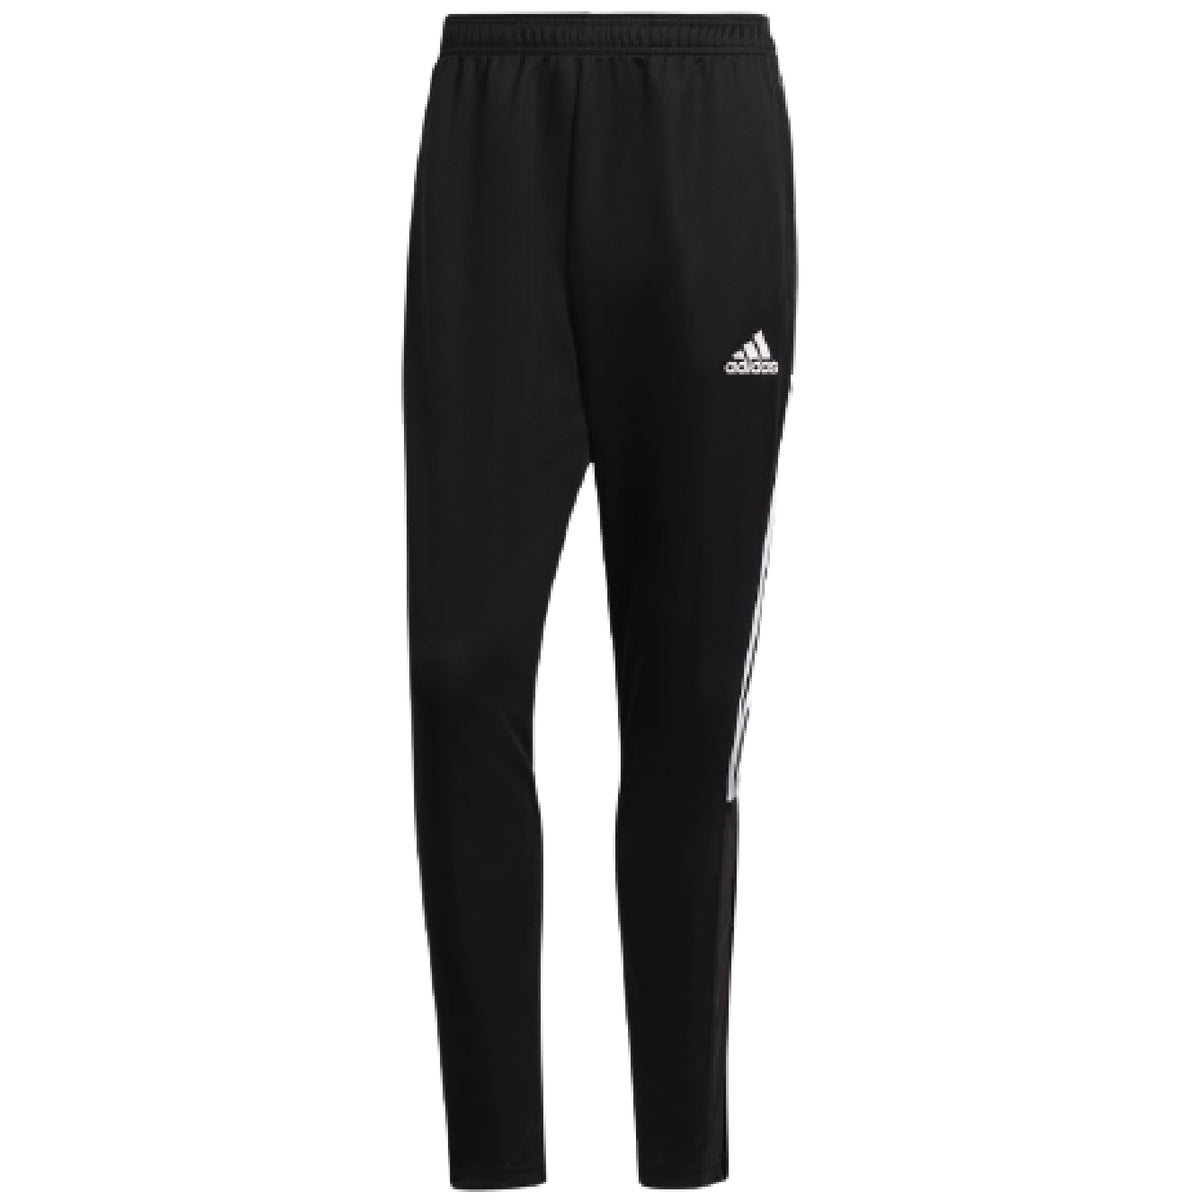 21 Tiro Pants- adidas USA Zone – Training Black/White Soccer